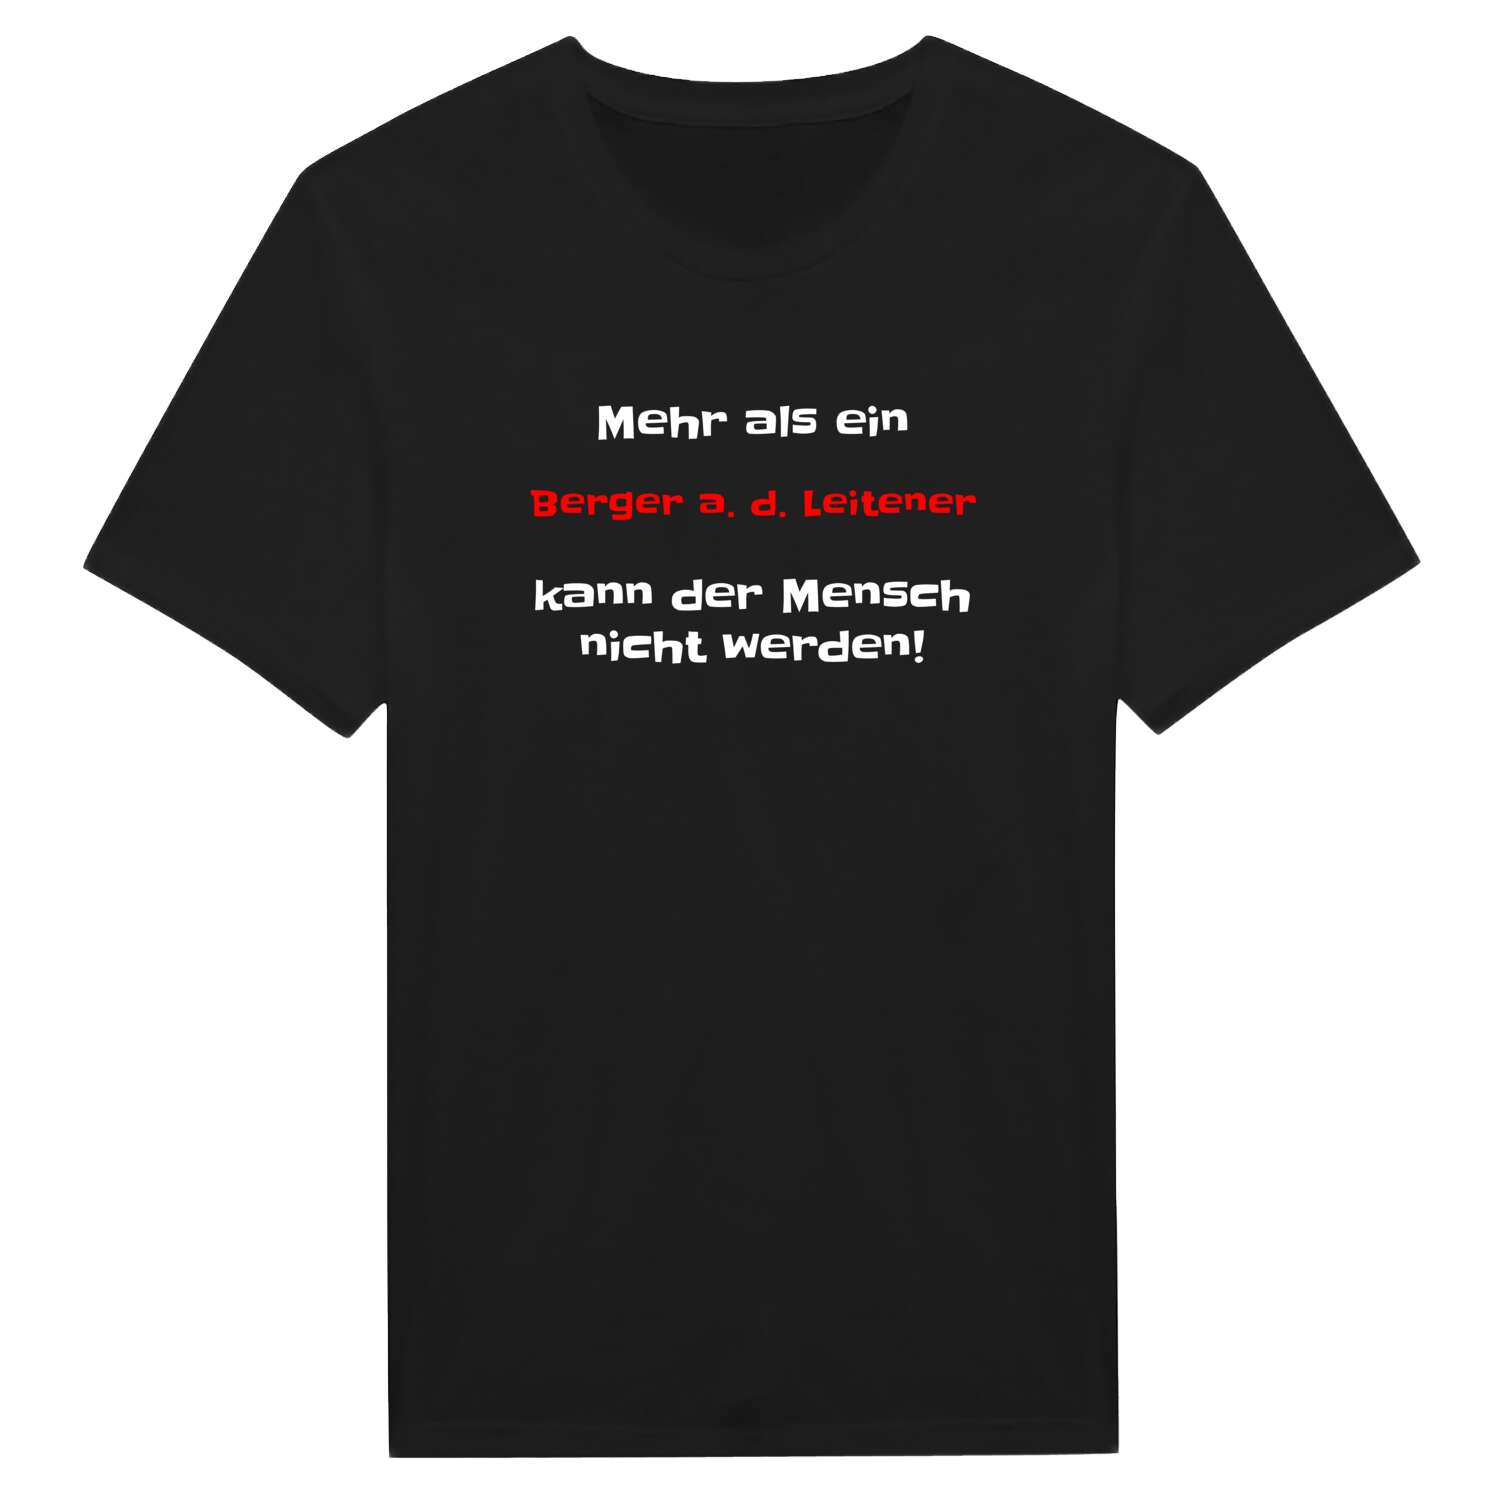 Berger a. d. Leiten T-Shirt »Mehr als ein«